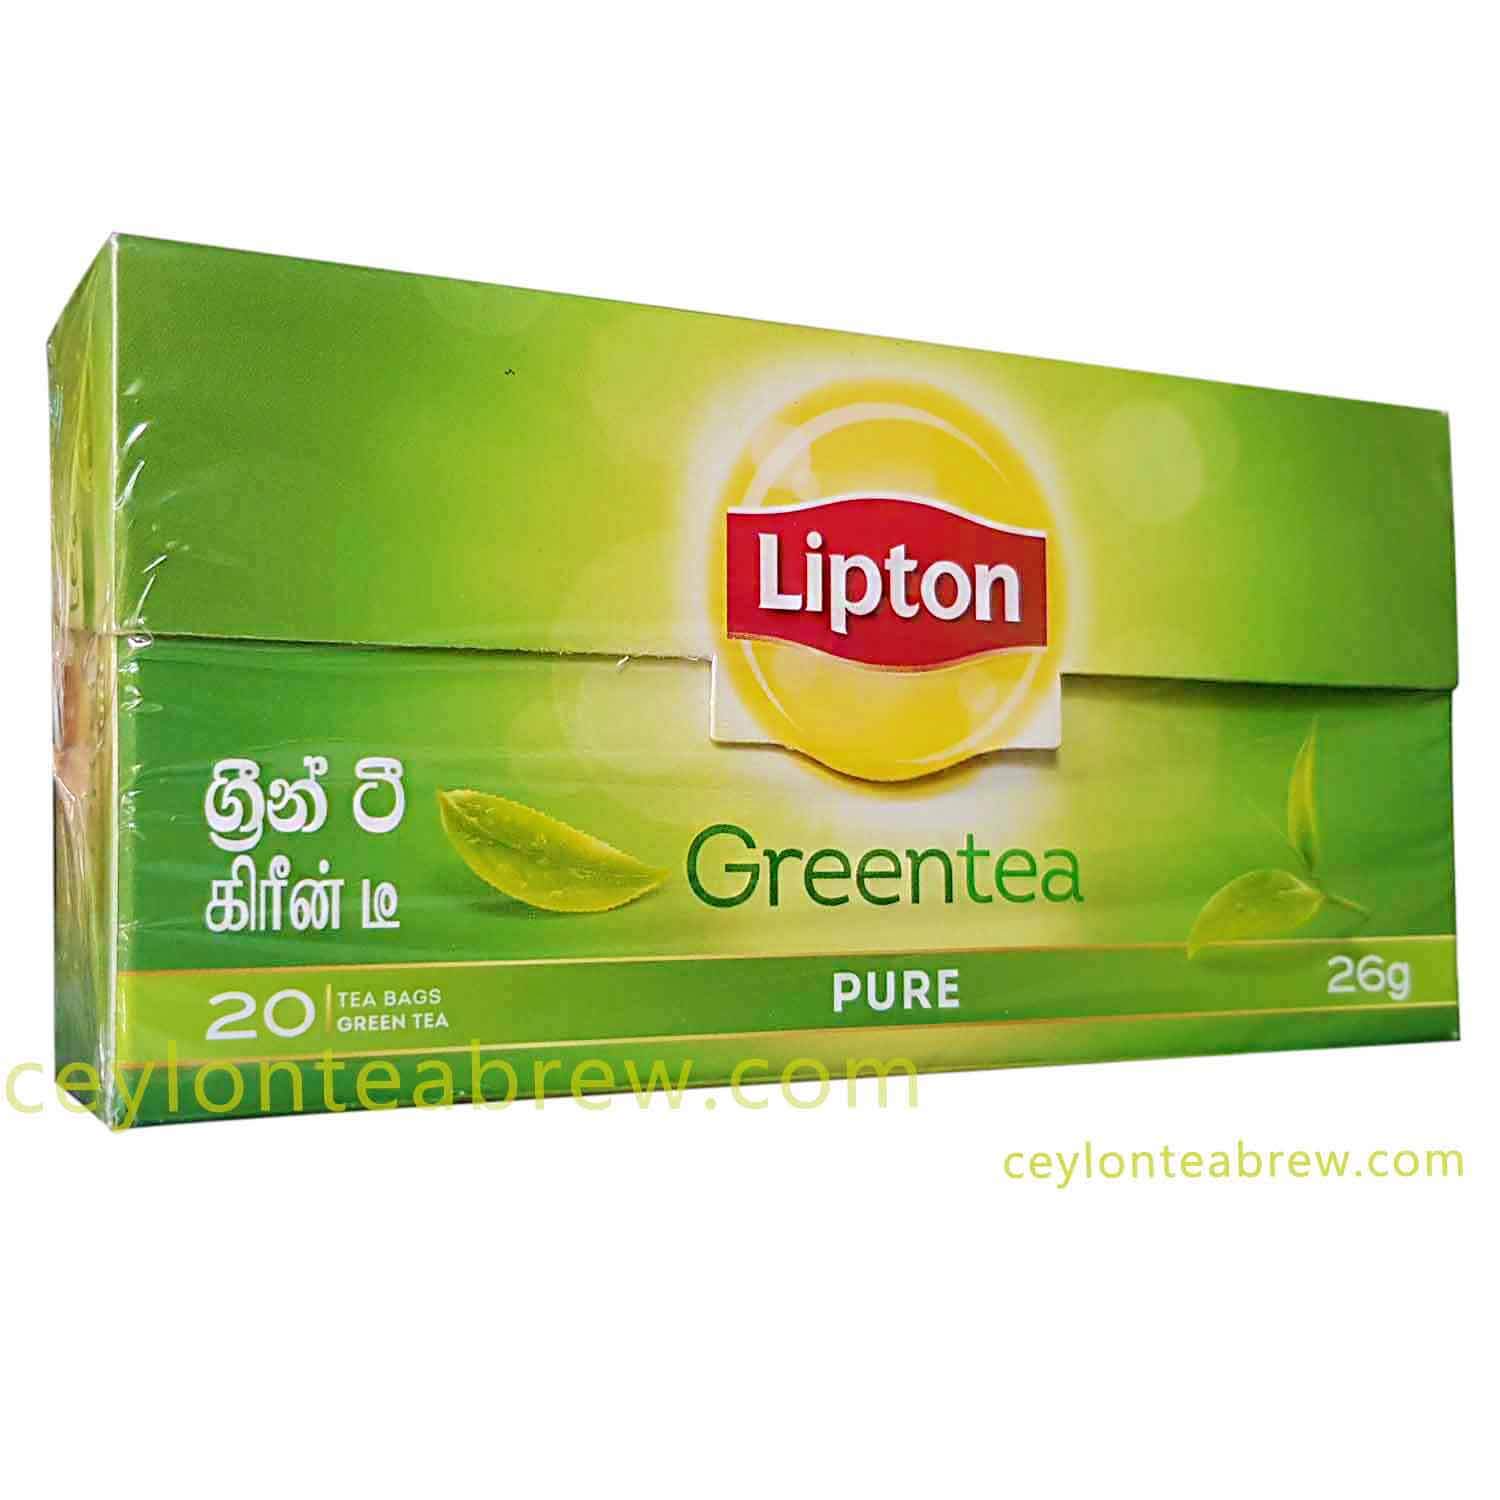 Lipton ceylon pure green tea bags